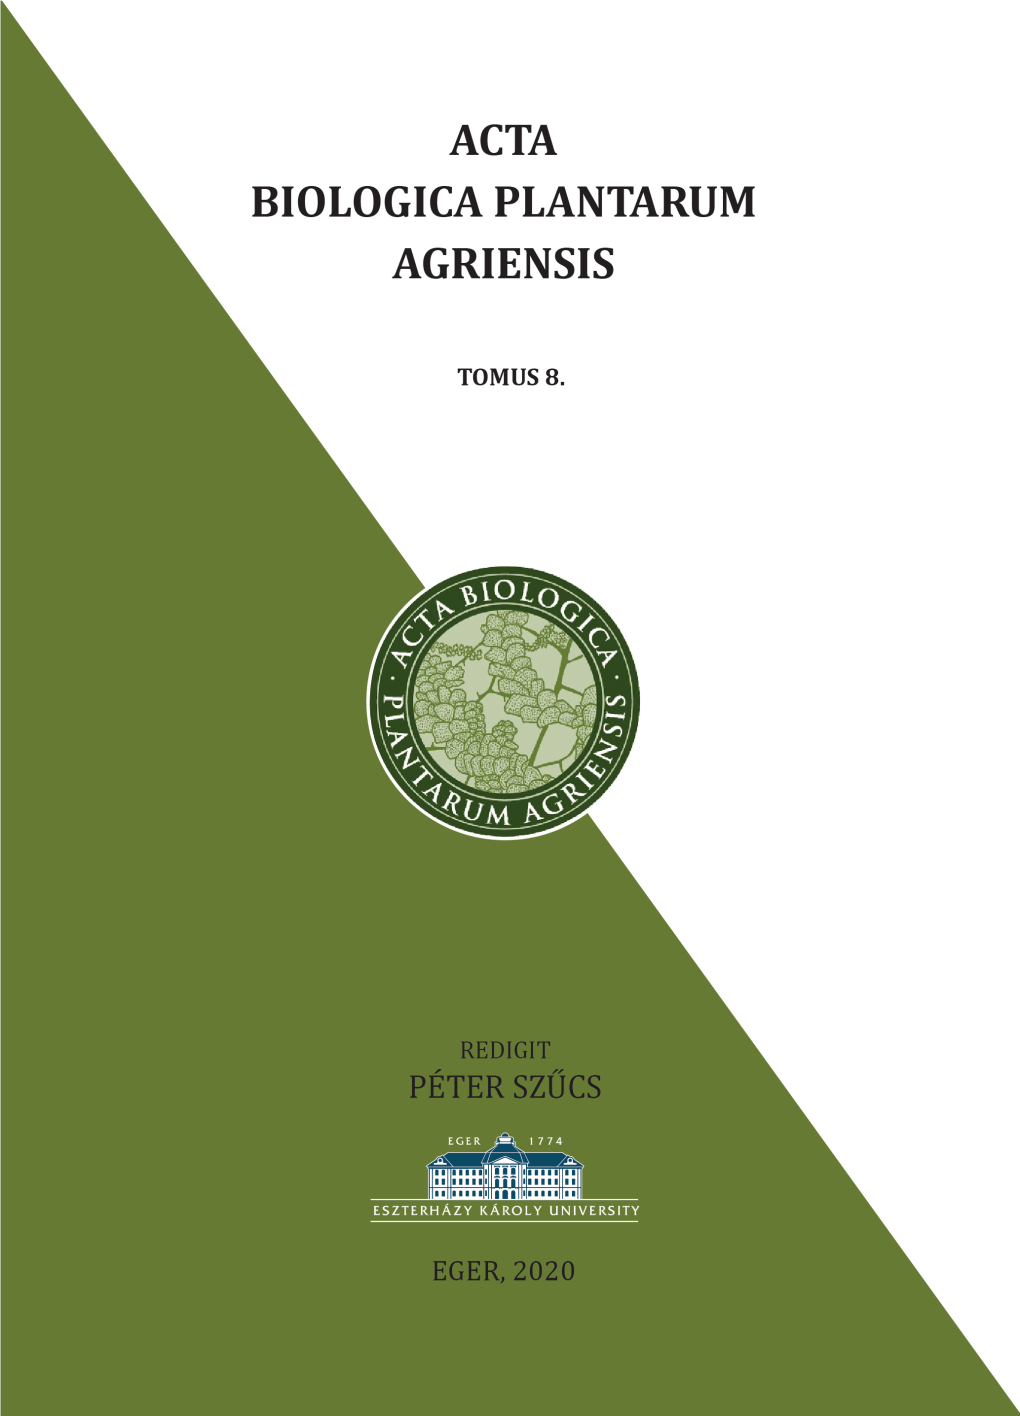 Acta Biologica Plantarum Agriensis (Abpa)